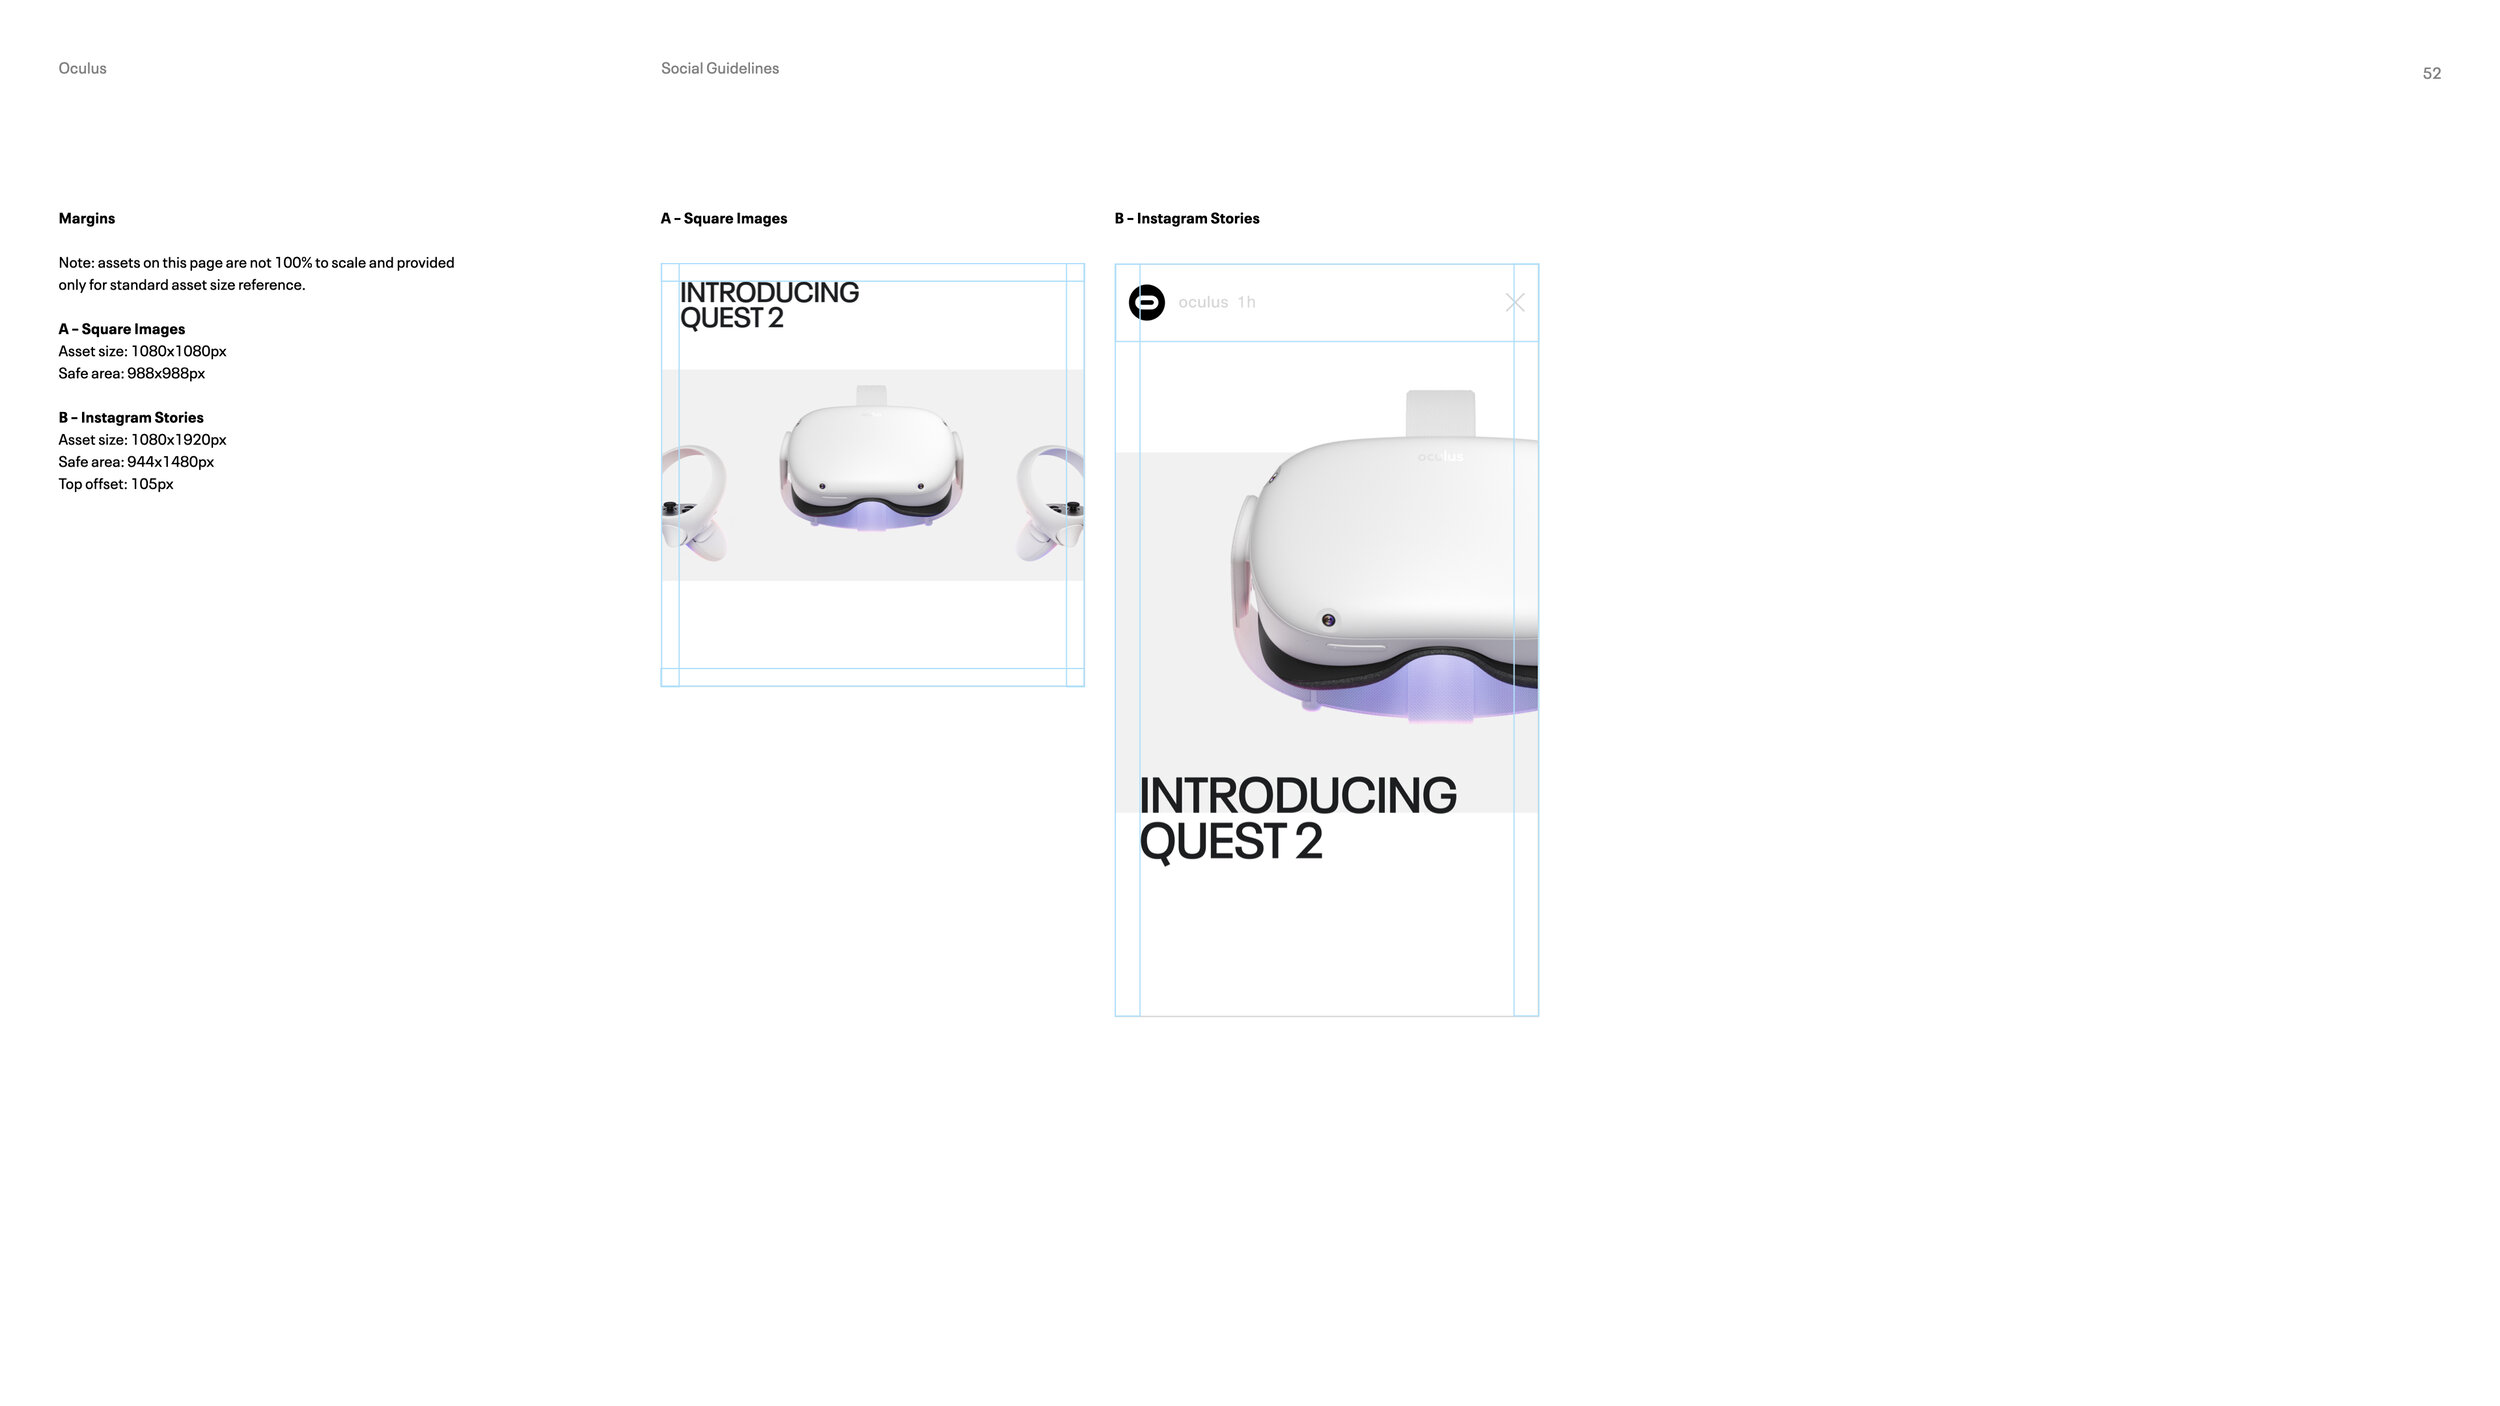 2020_10_13_Oculus_Social_Guidelines (1).052.jpeg